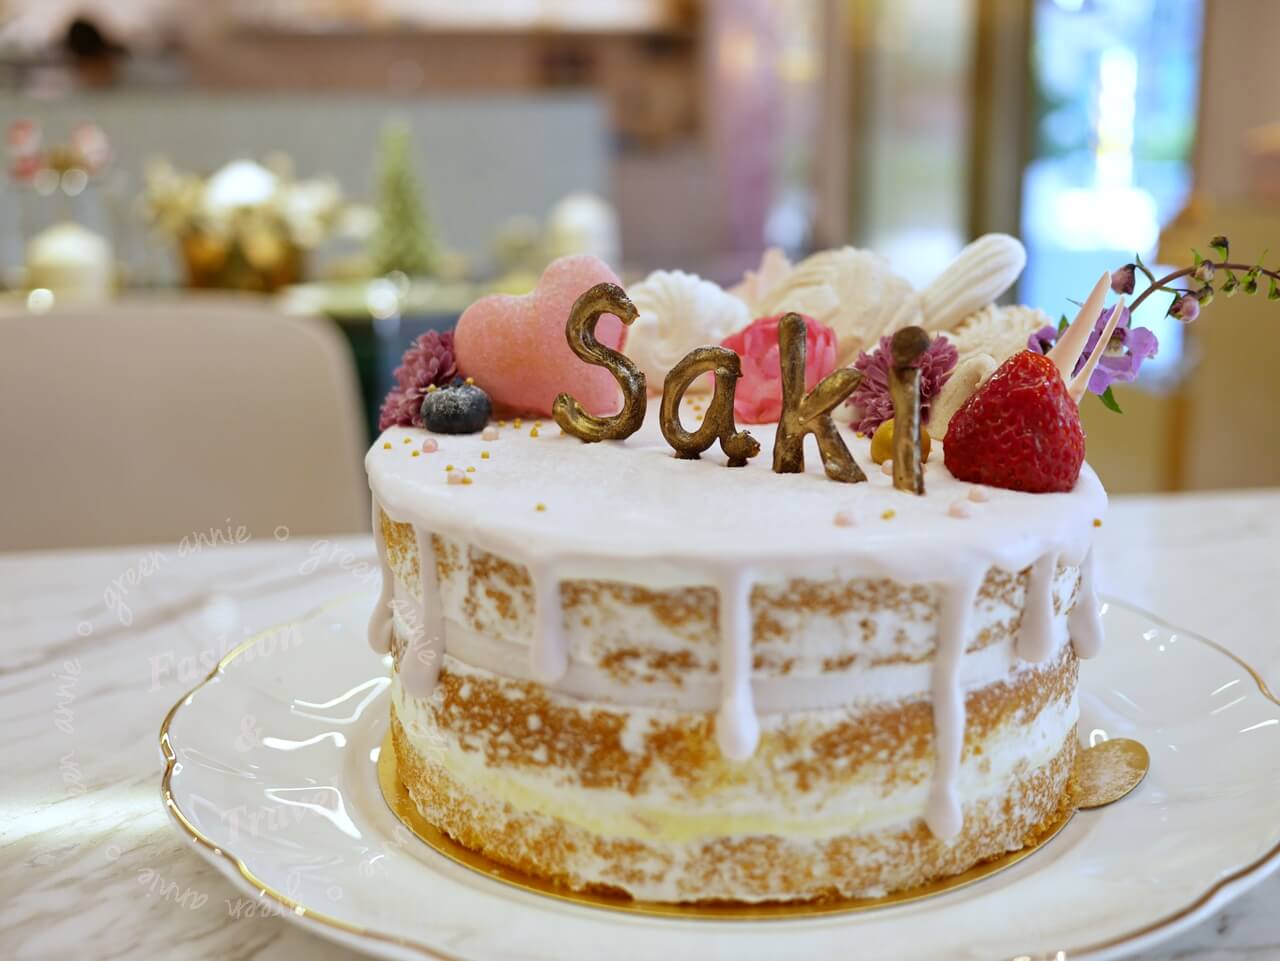 Cher Mouton 姆桐 花蛋糕